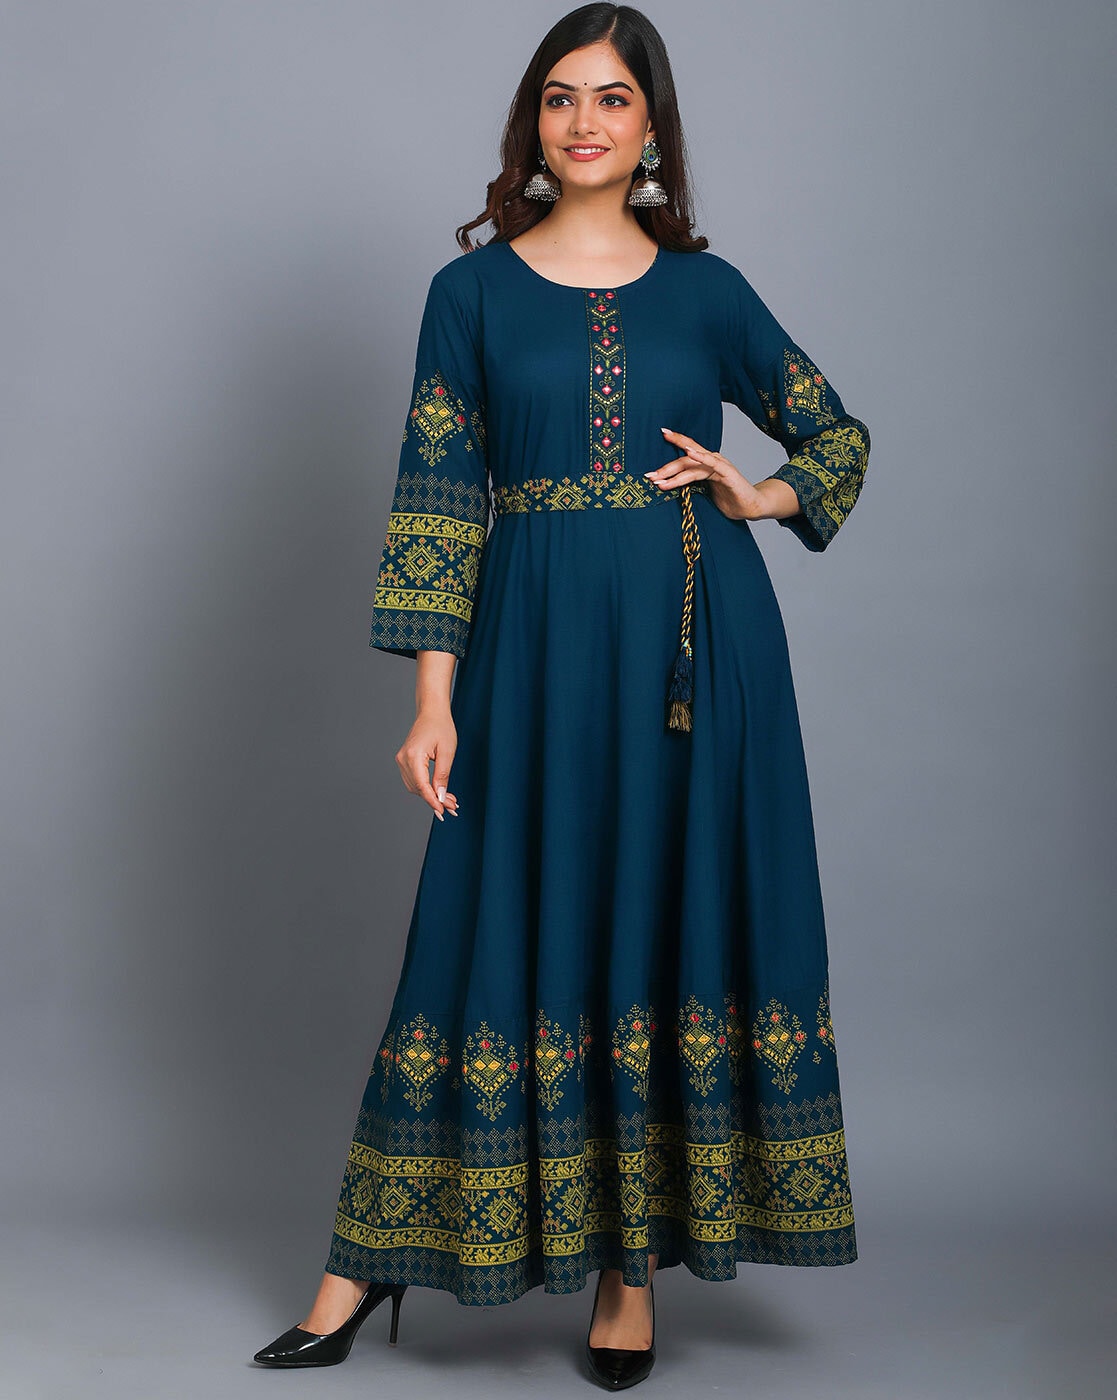 Women Casual Dresses - Buy Women Casual Dresses Online Starting at Just  ₹187